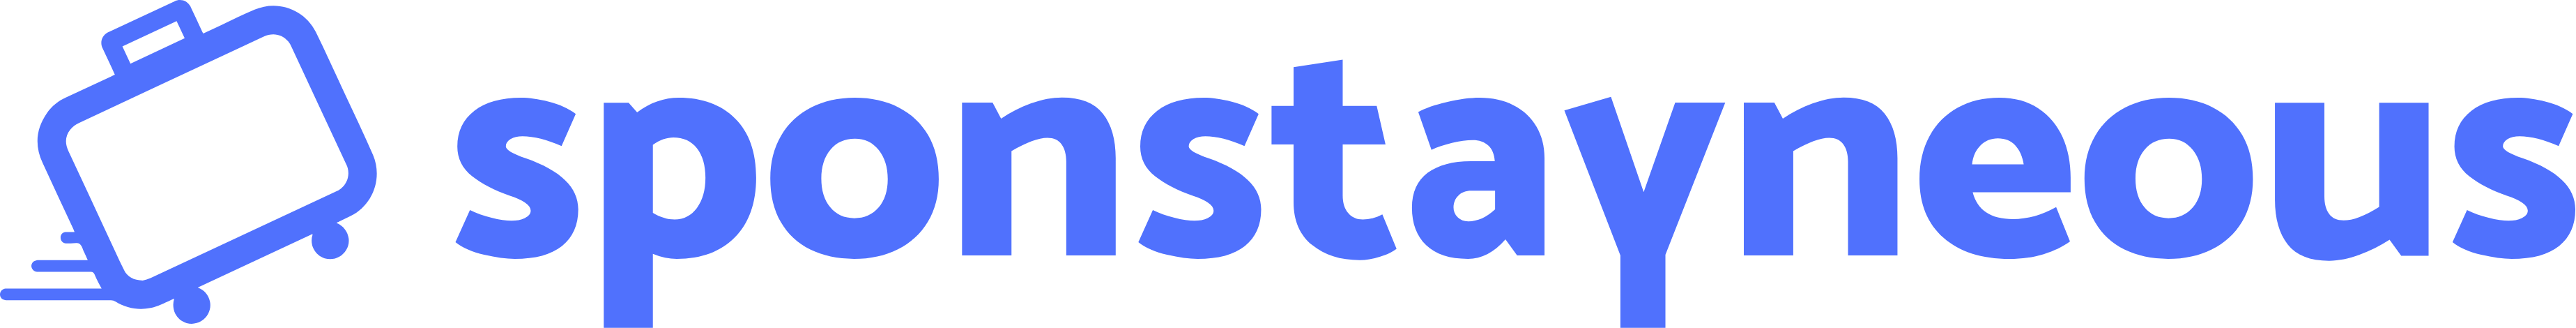 Sponstayneous-logo-blue